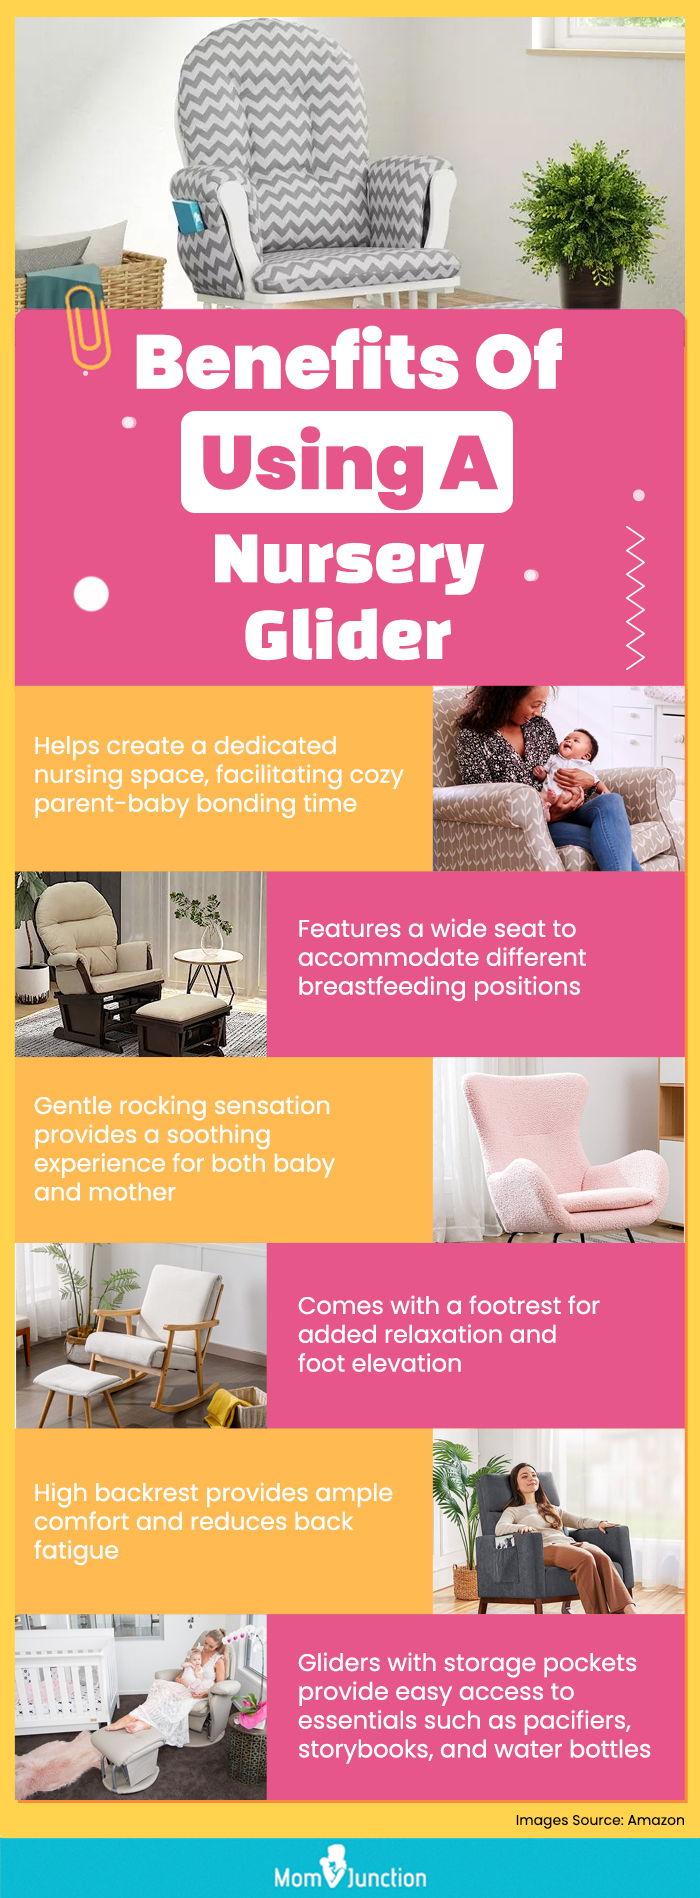 https://www.momjunction.com/wp-content/uploads/2015/04/Benefits-Of-Using-A-Nursery-Glider.jpg